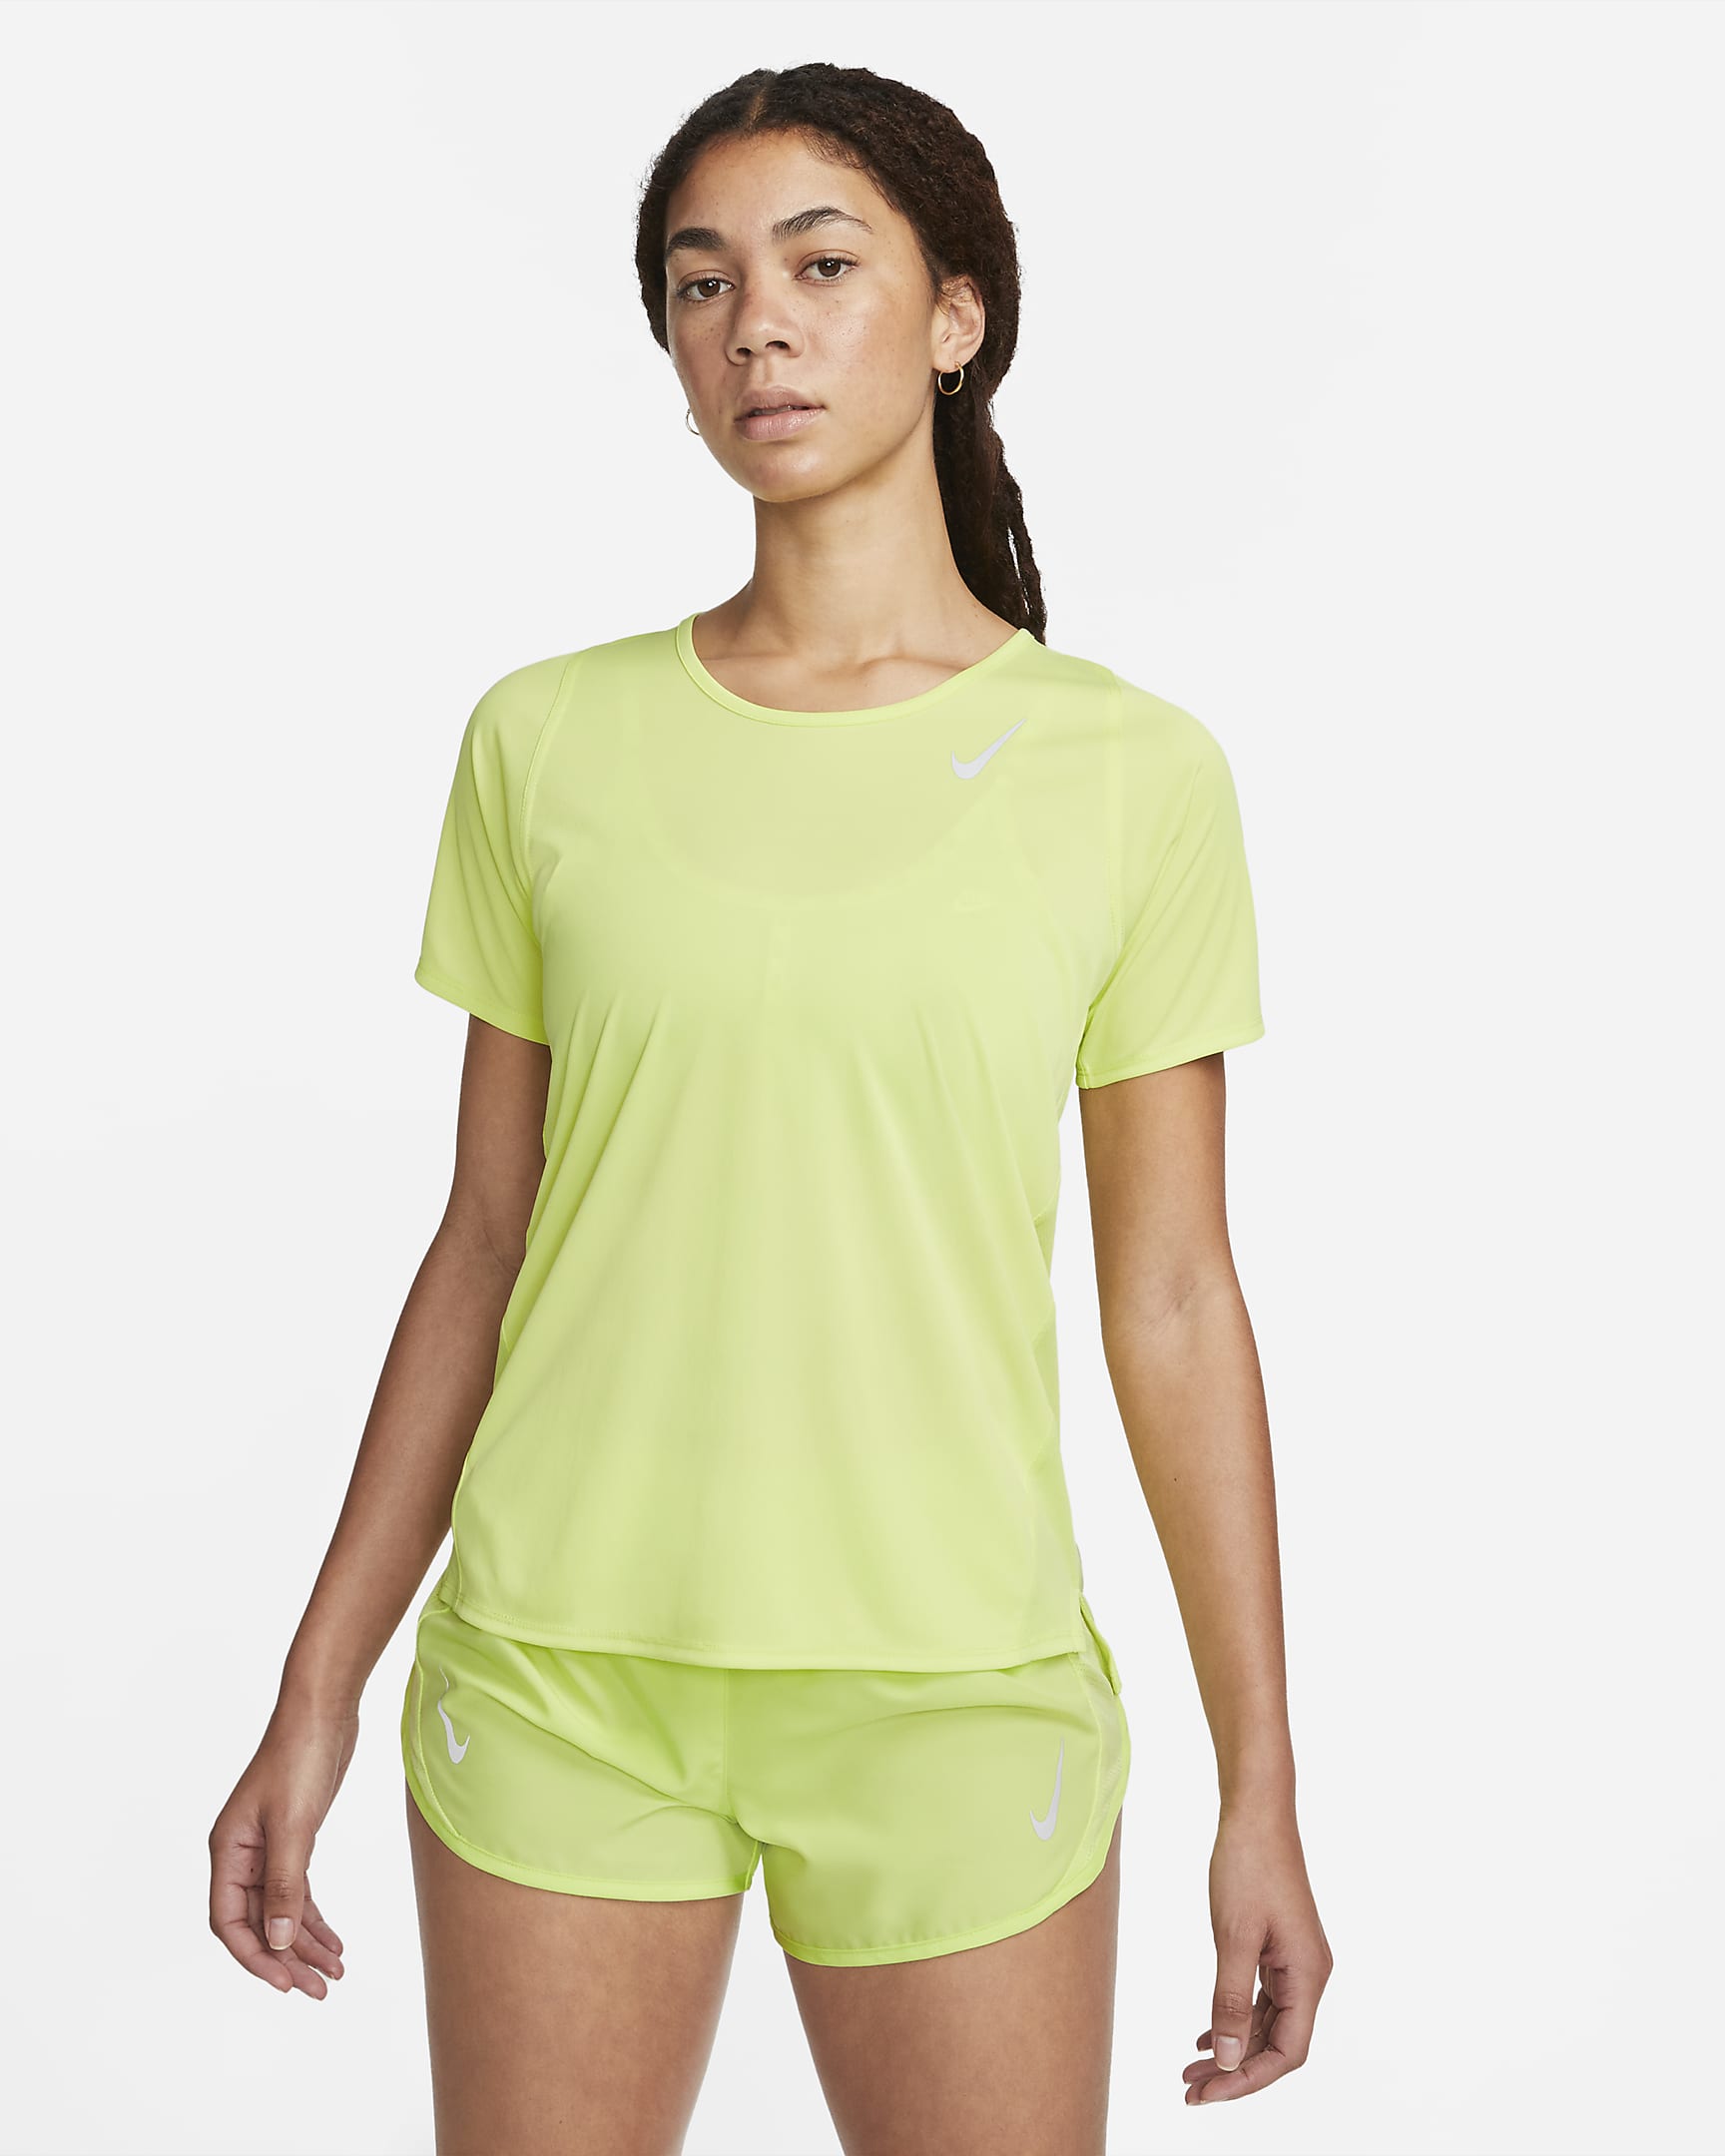 Nike Dri-FIT Race Women's Short-Sleeve Running Top. Nike AU